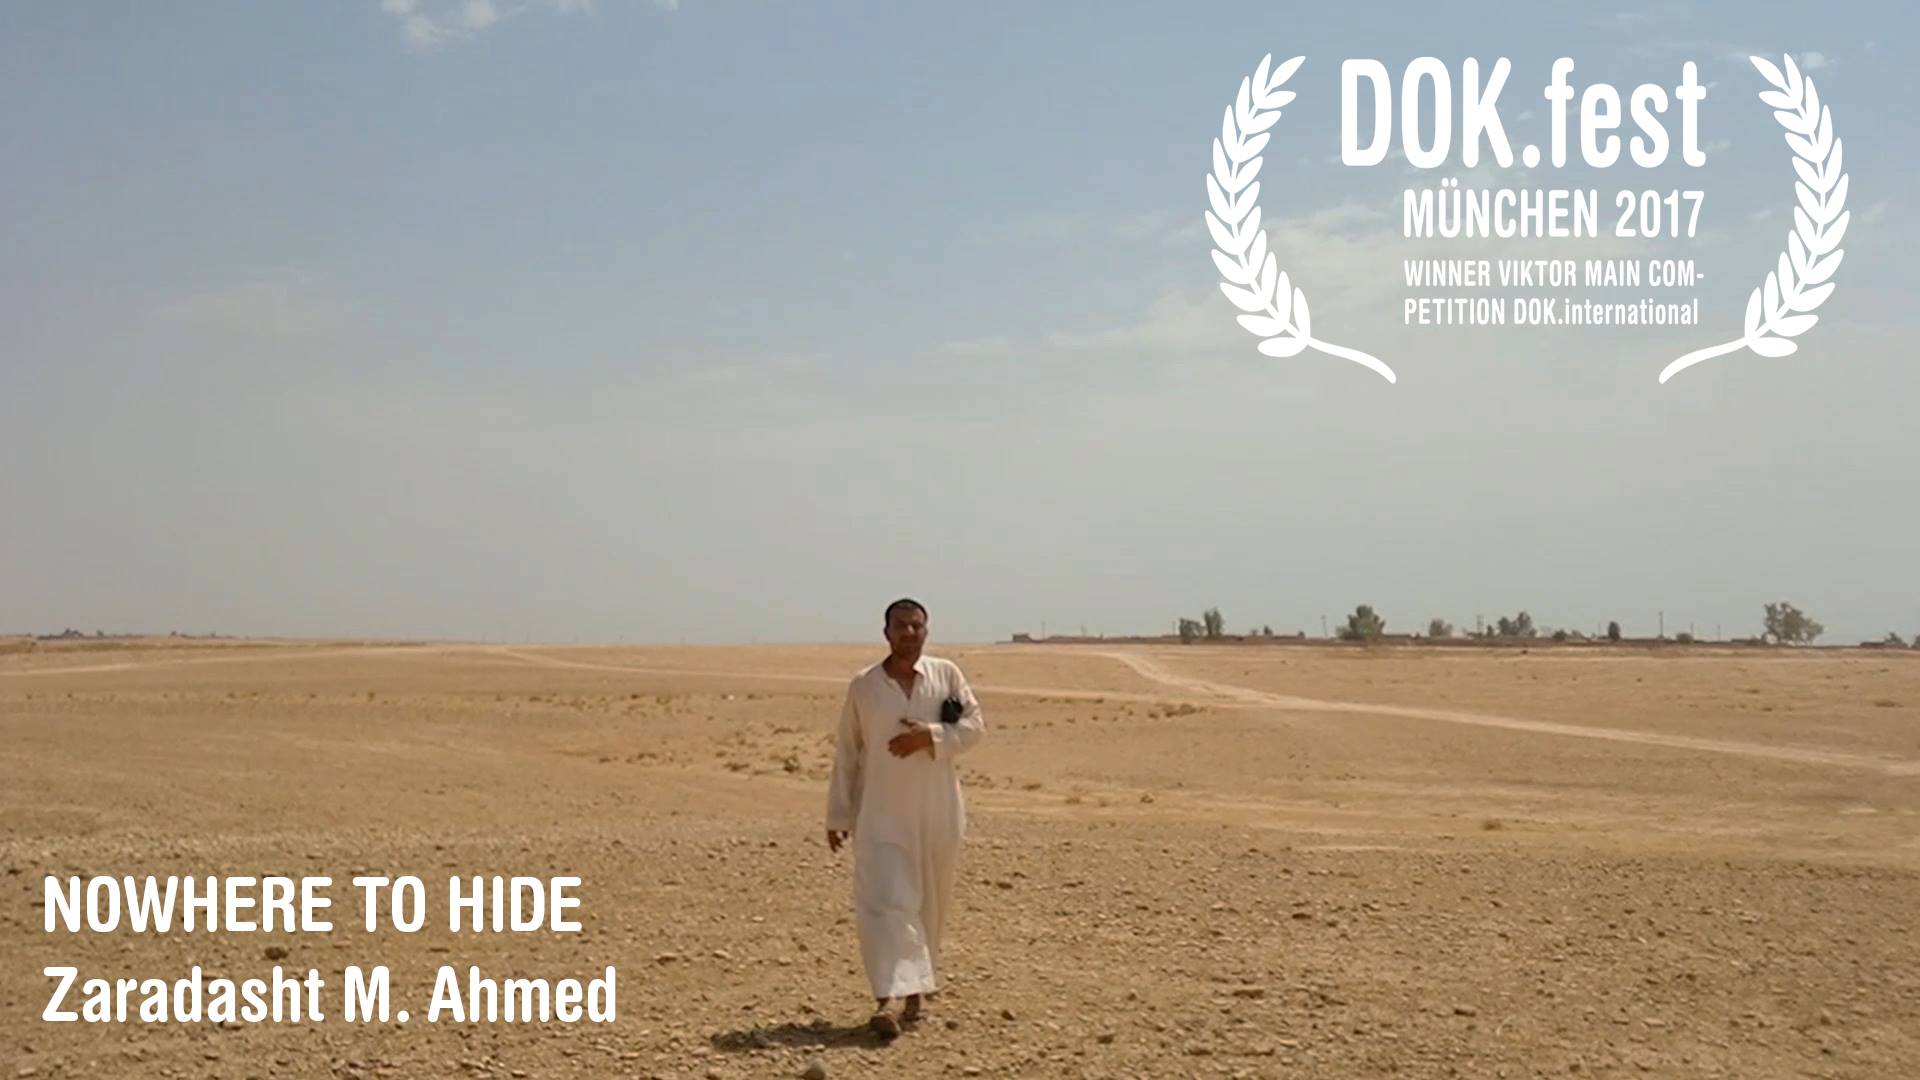 Nowhere to hide: DOK.fest München Award